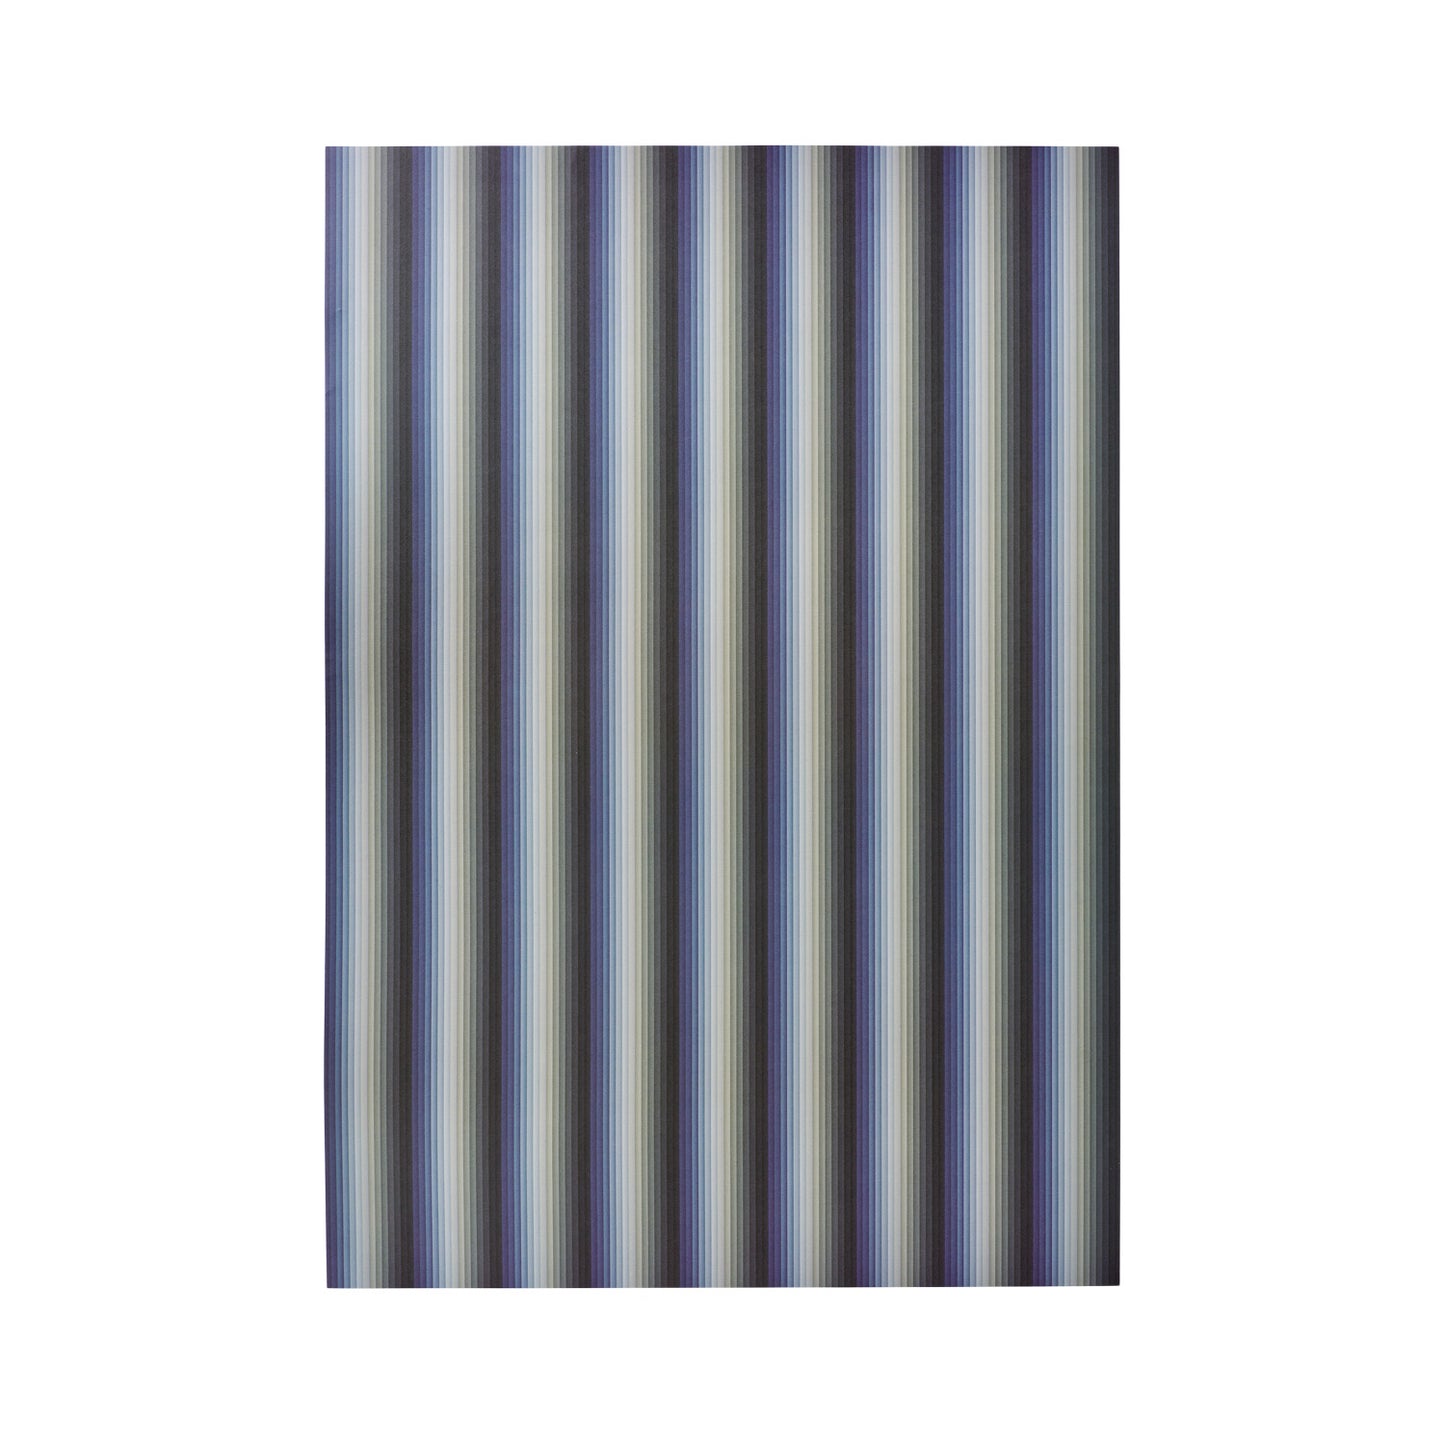 Undulating Stripes - Blue